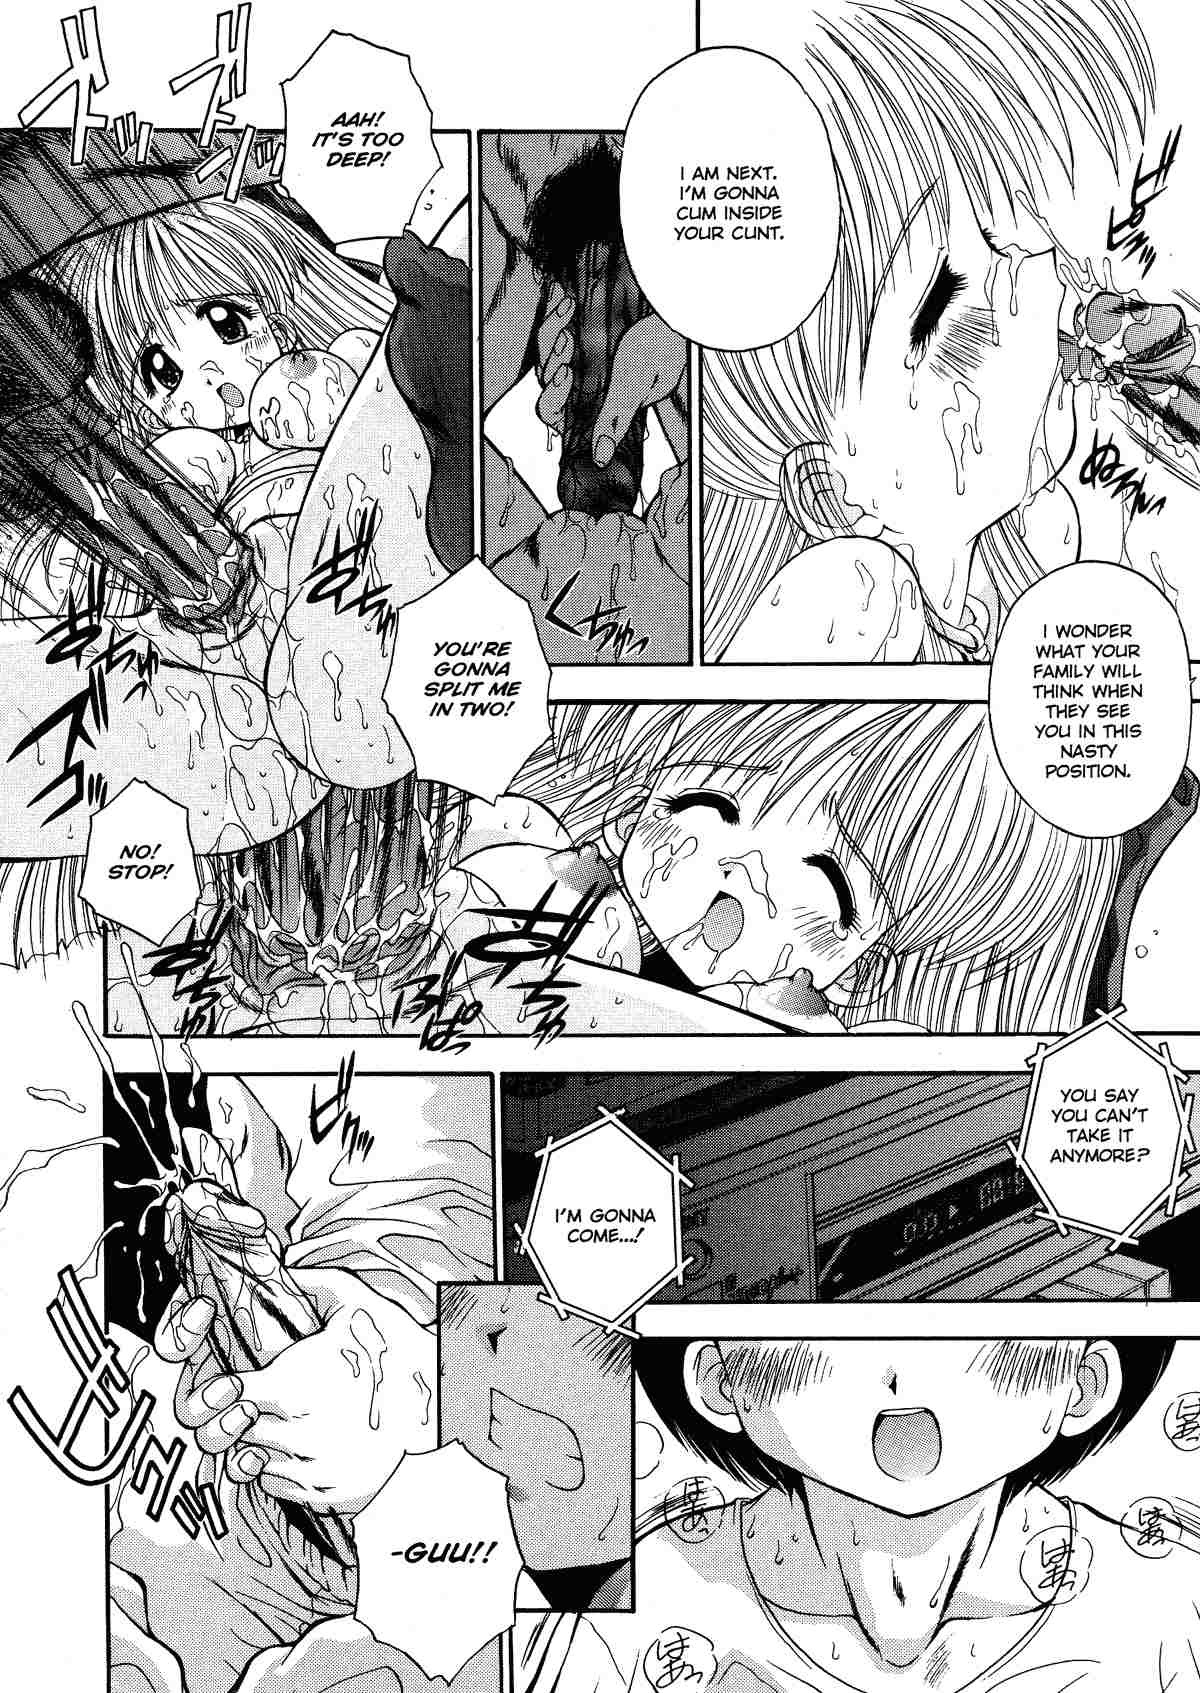 Innocence 35 hentai manga